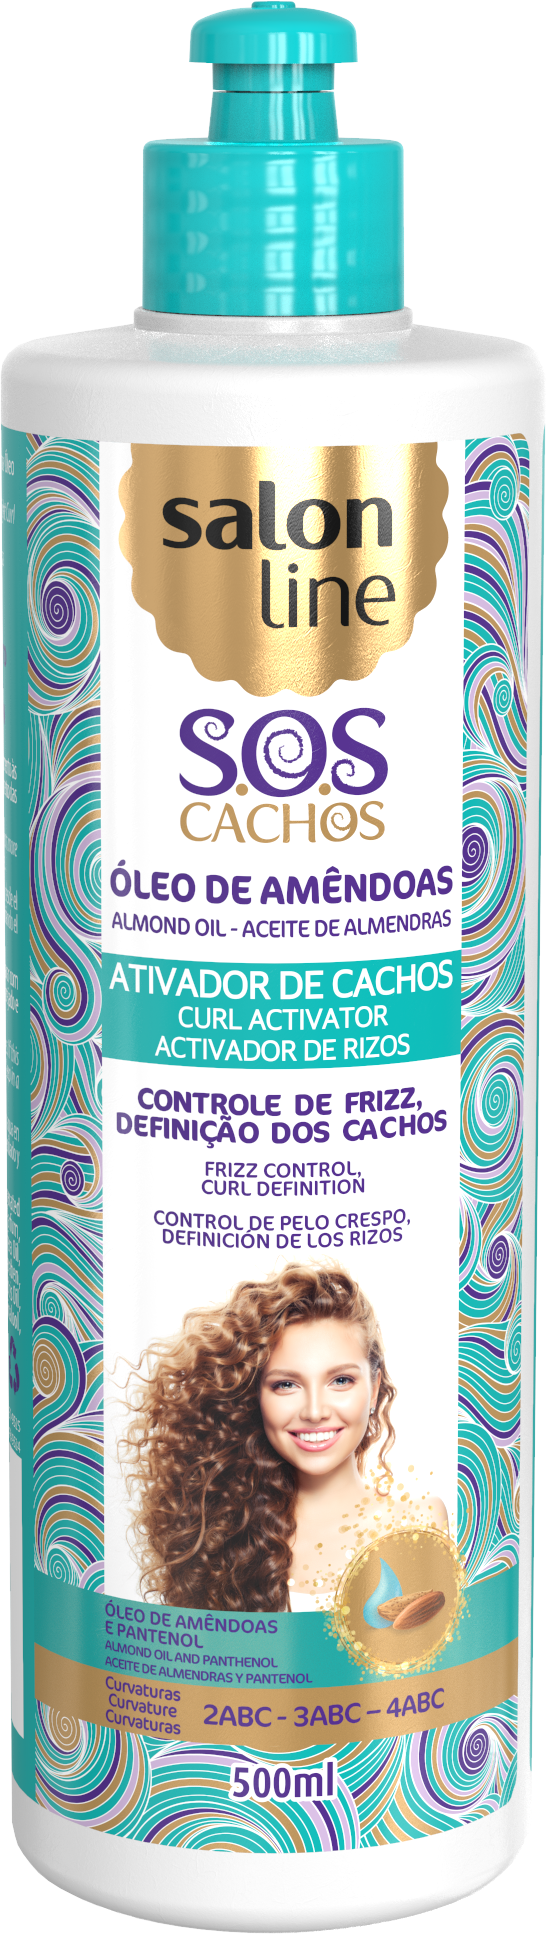 Salon Line S.O.S Cachos Almond Oil Curl Activator 500ml Salon Line